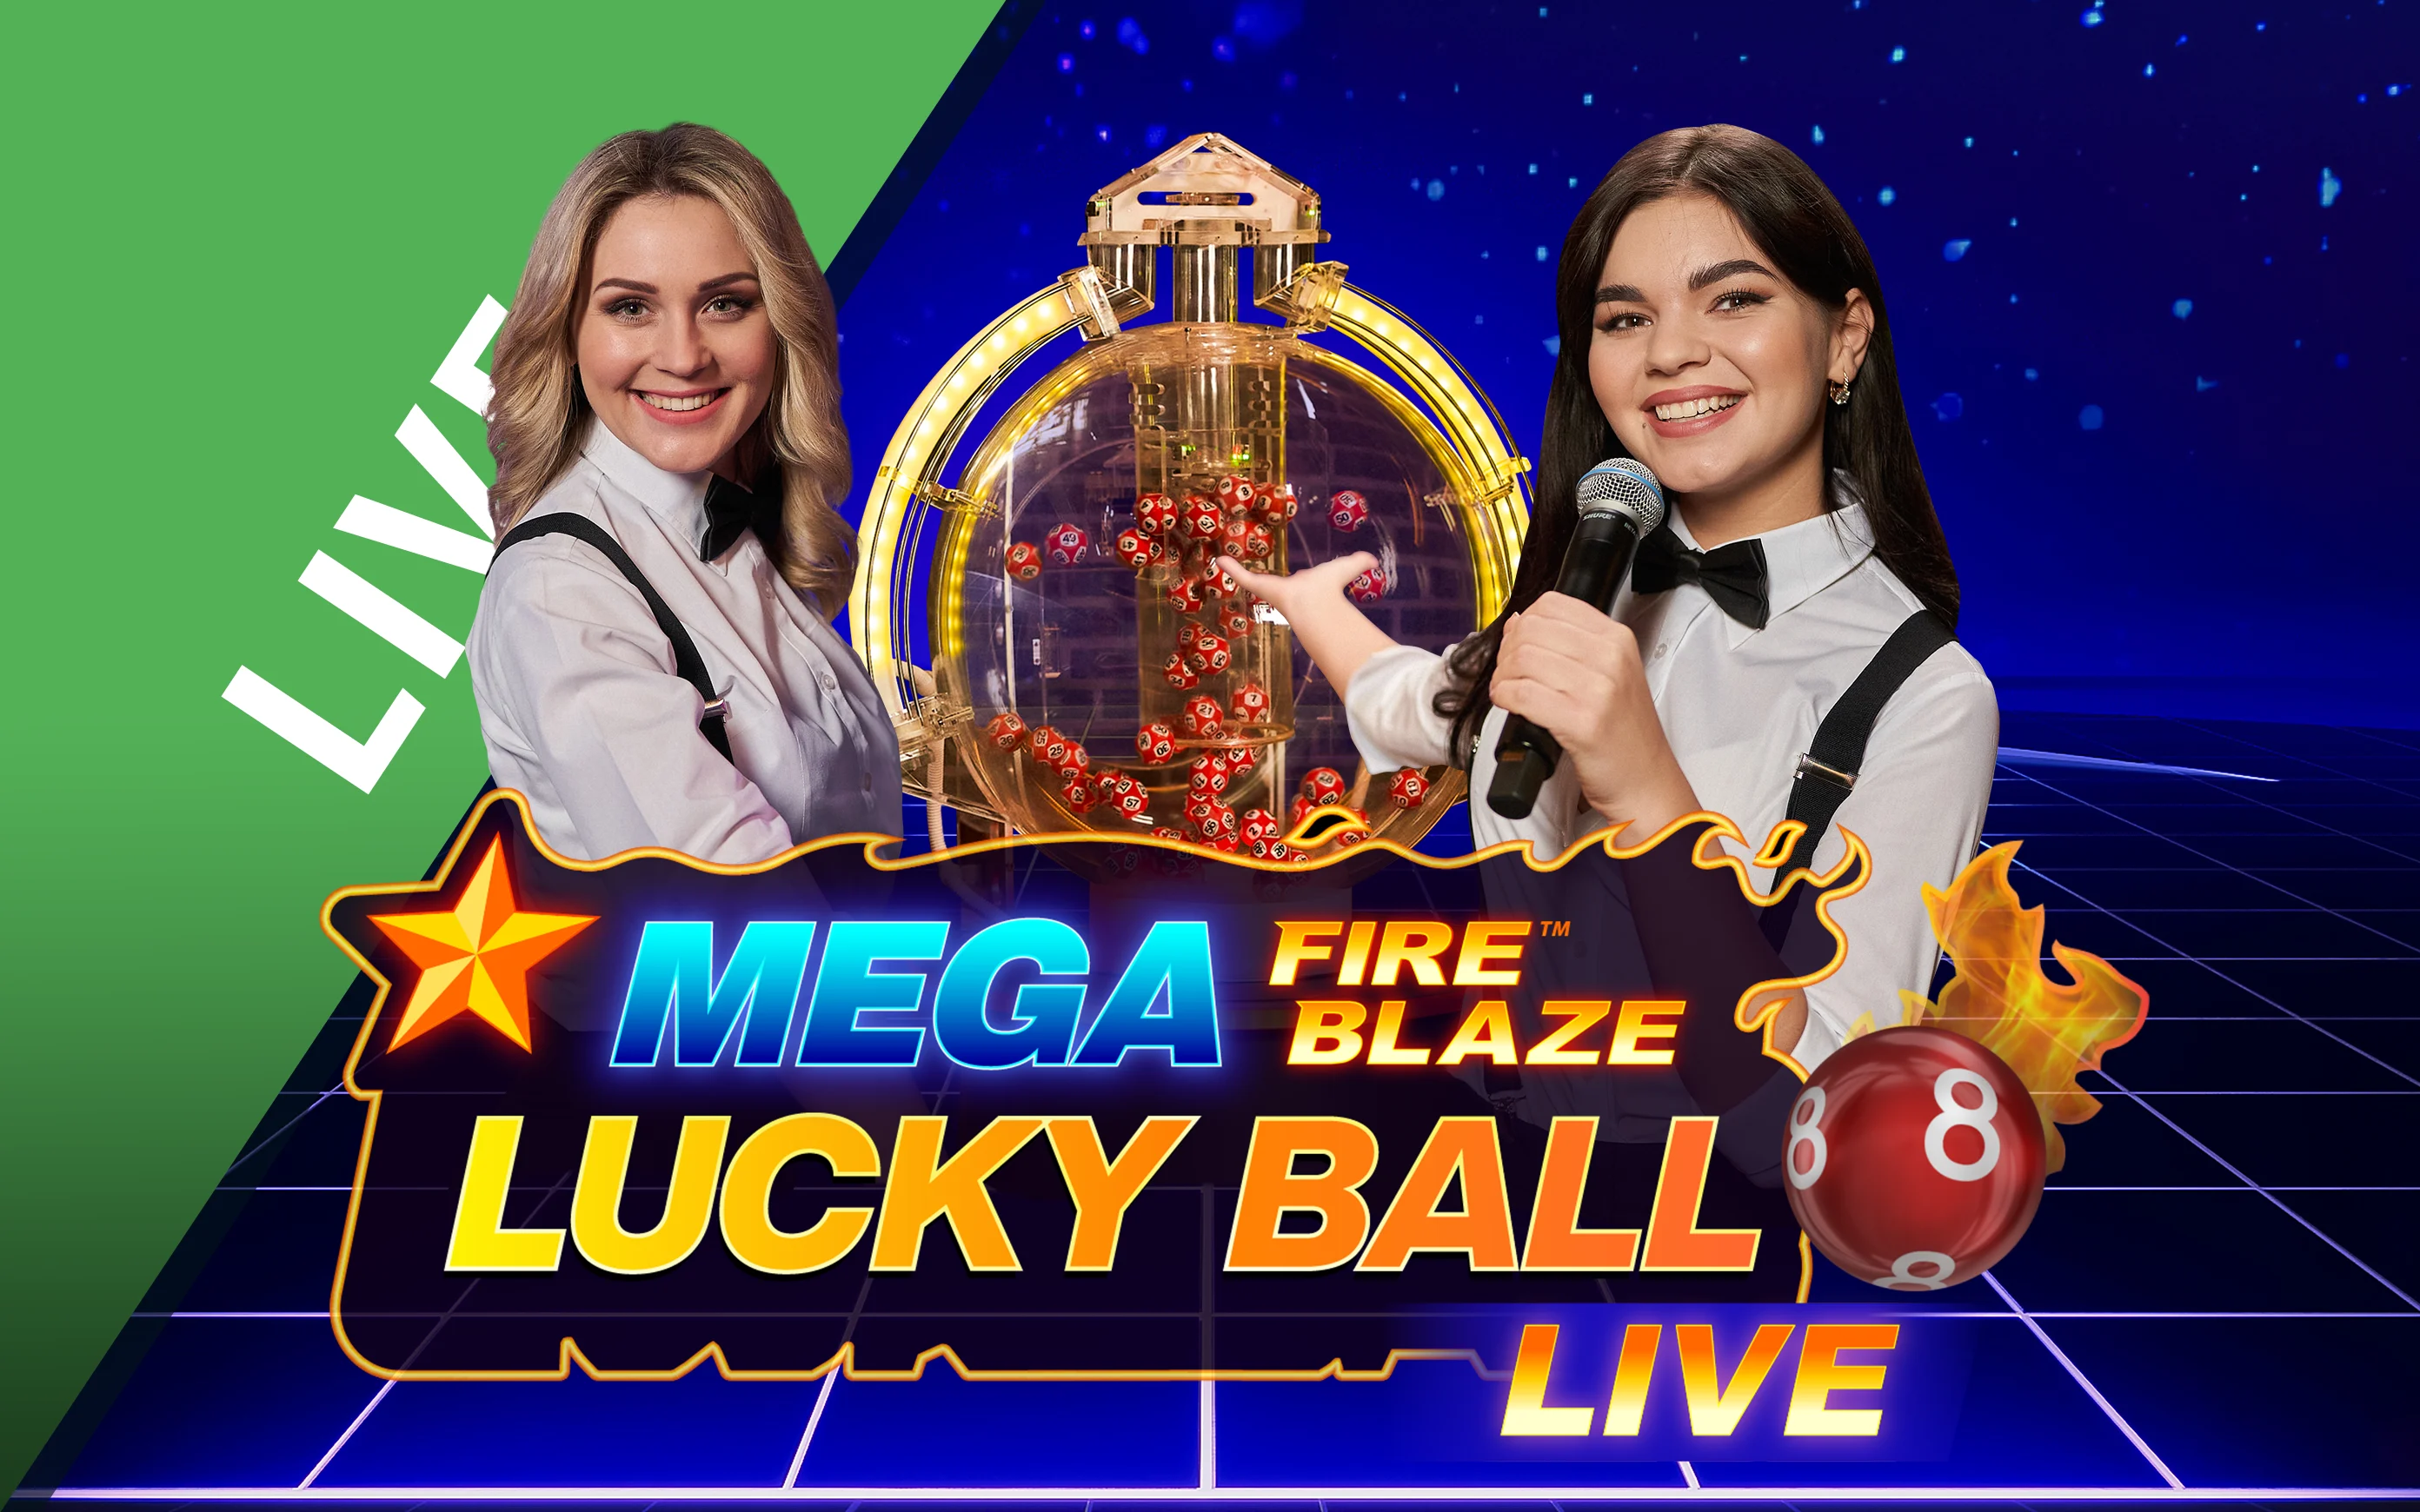 Play Mega Fire Blaze Lucky Ball Live on Starcasino.be online casino